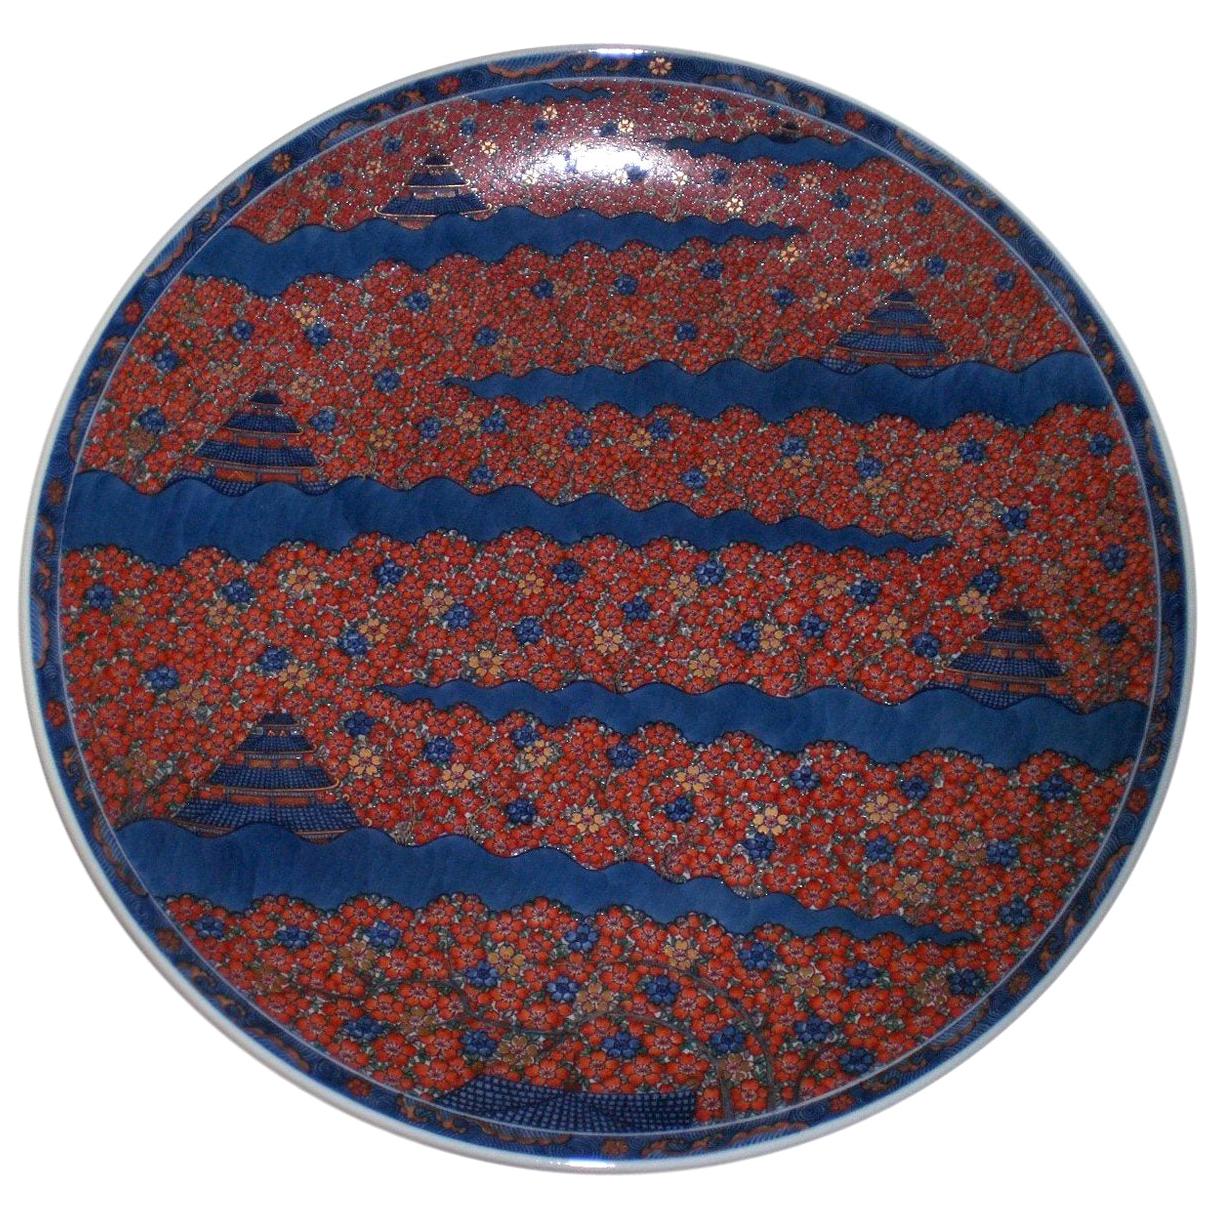 Large Japanese Imari Red Blue Porcelain Charger by Master Artist